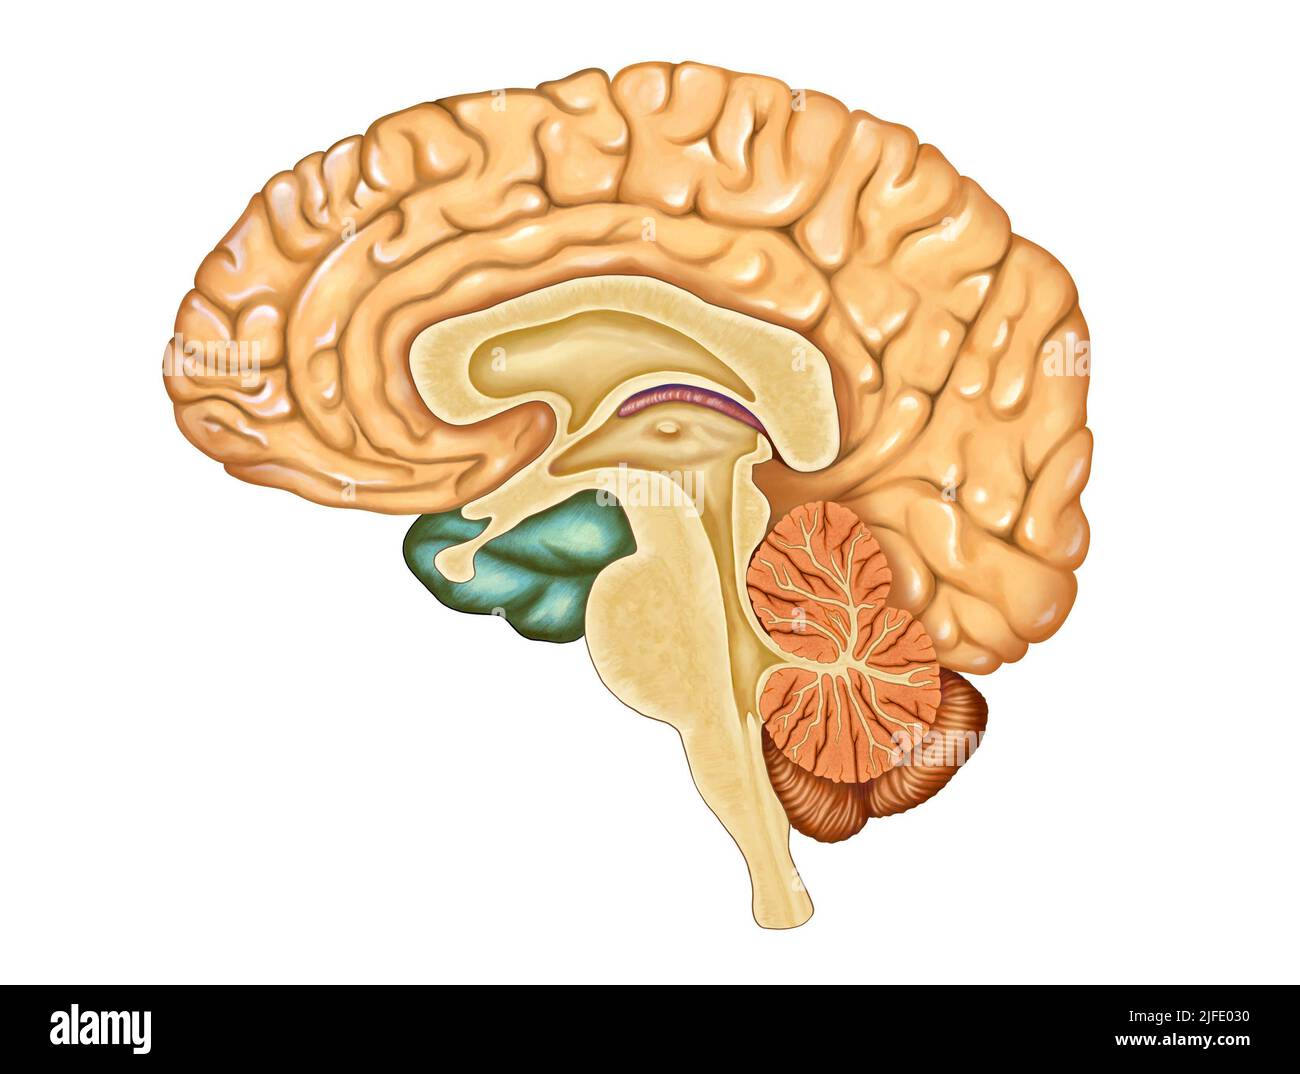 Cross-section of an human brain. Digital illustration Stock Photo